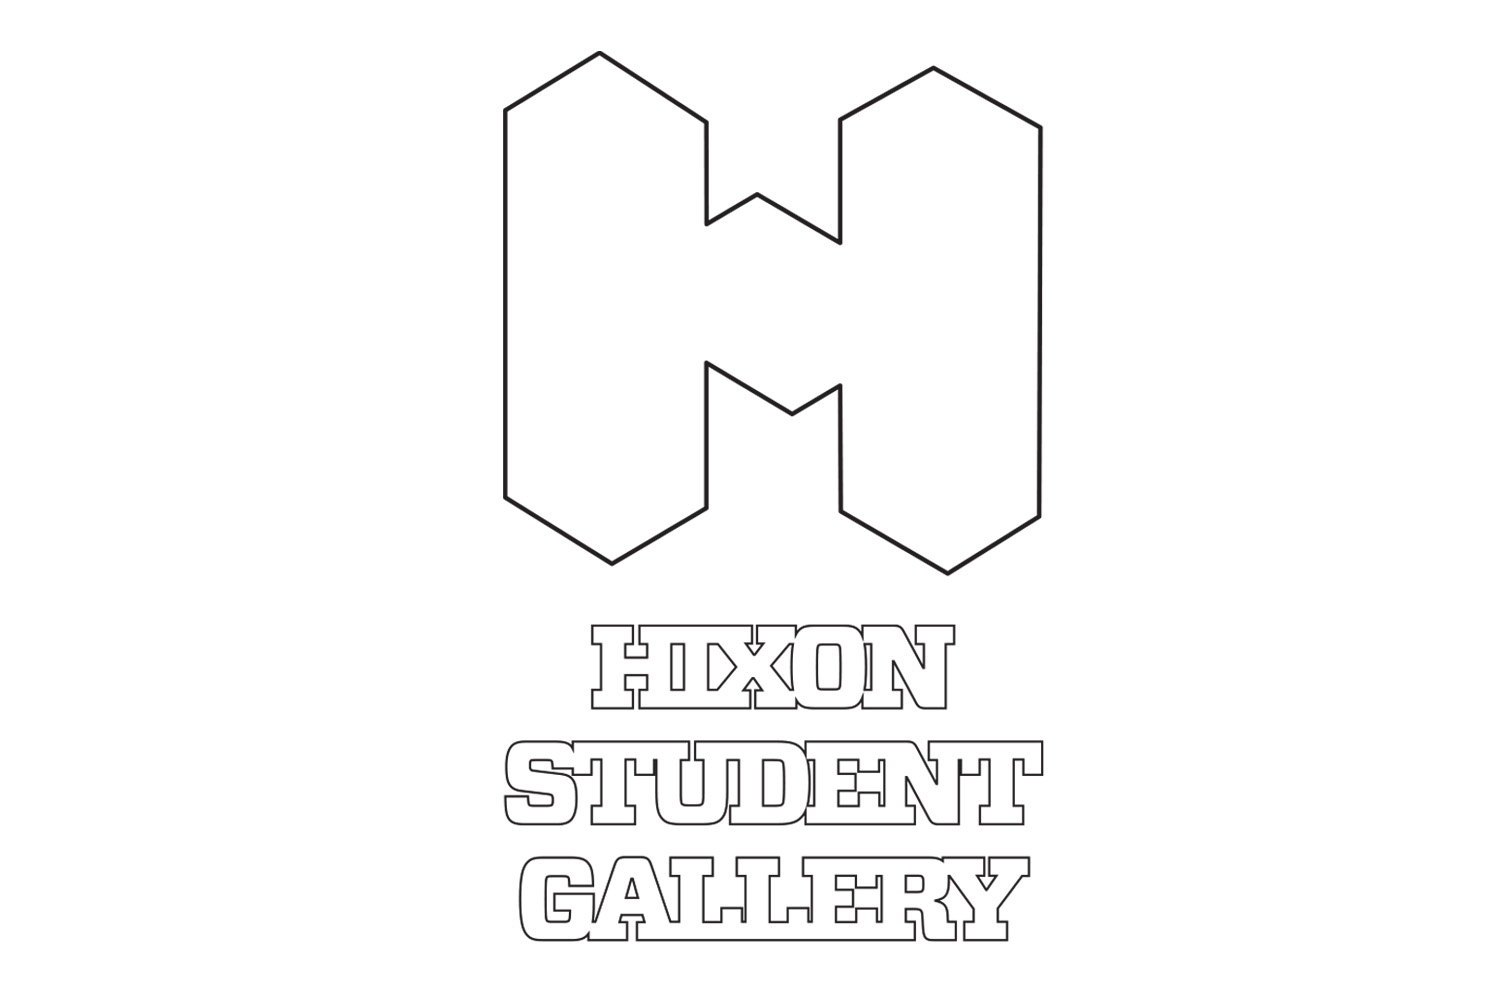 Hixon Student Gallery logo